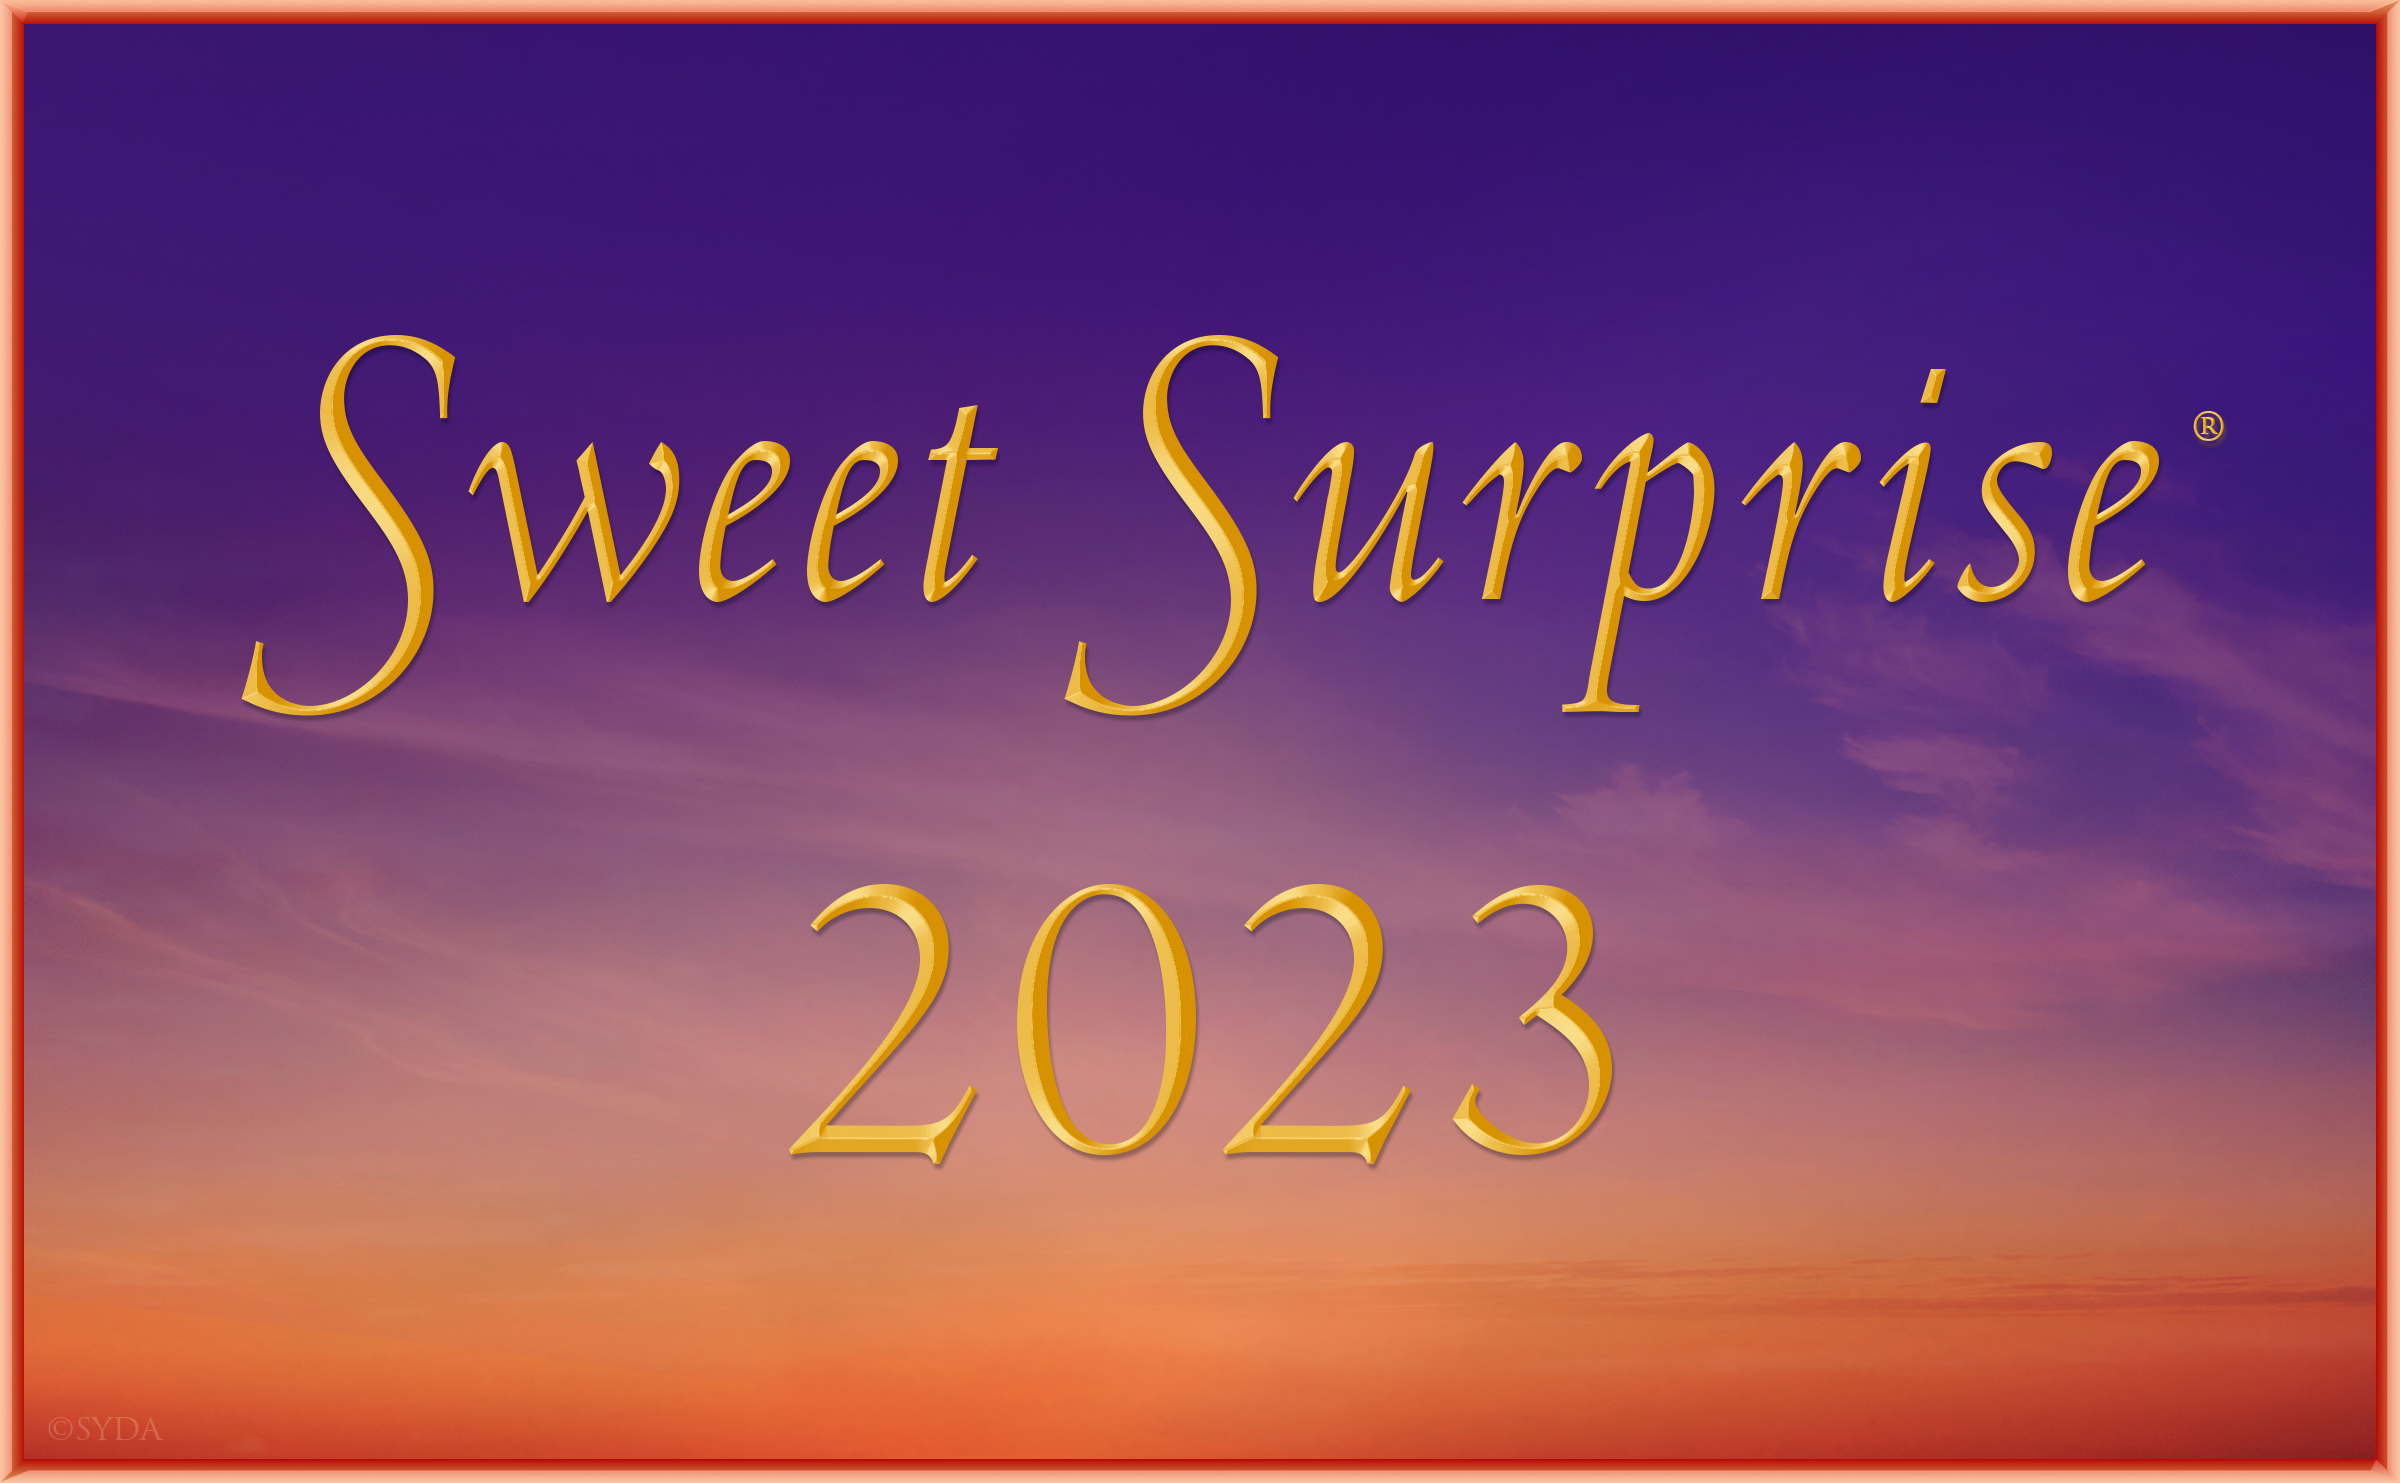 Sweet Surprise 2023